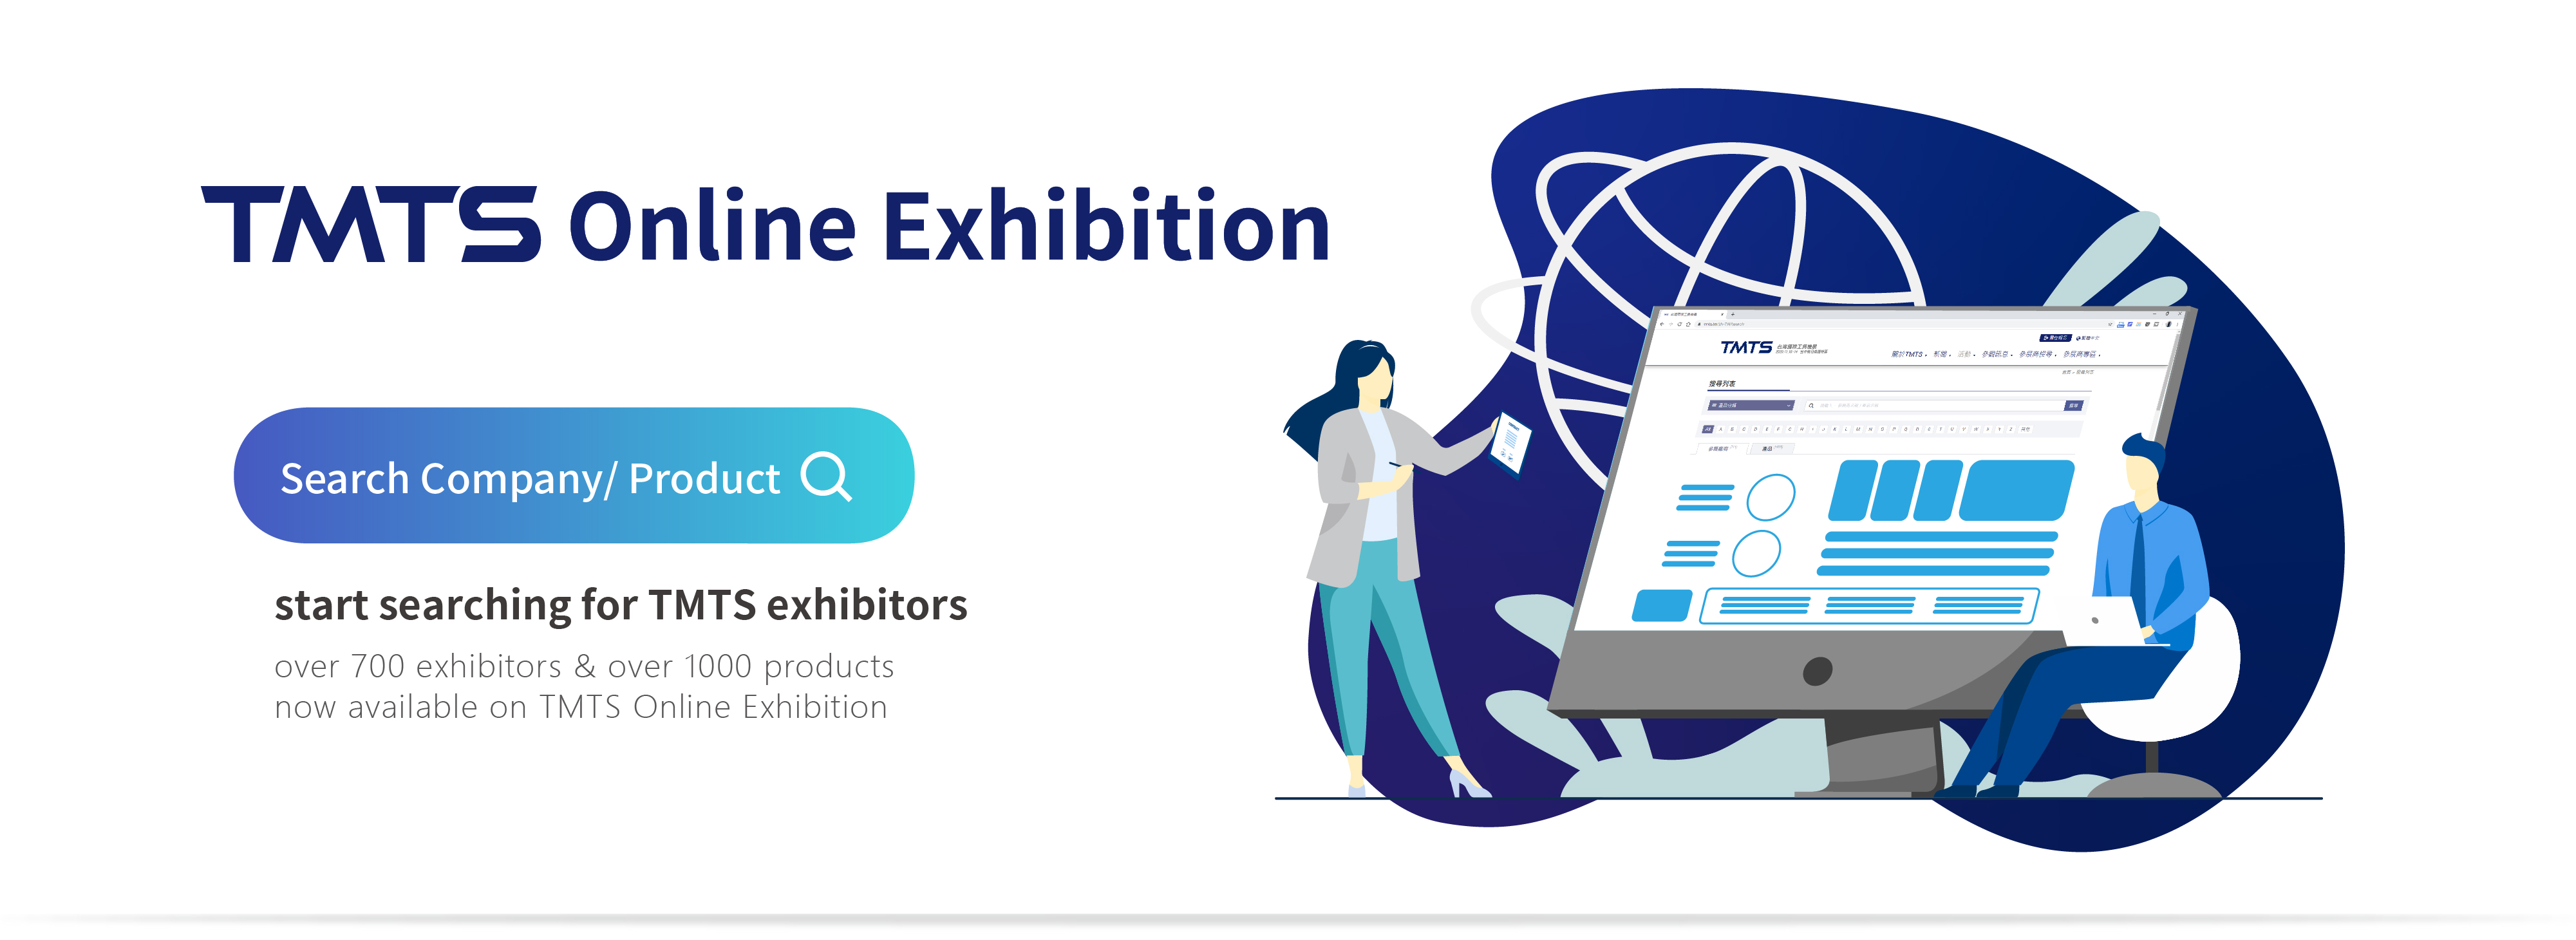 TMTS 2020 Online Virtual Exhibition